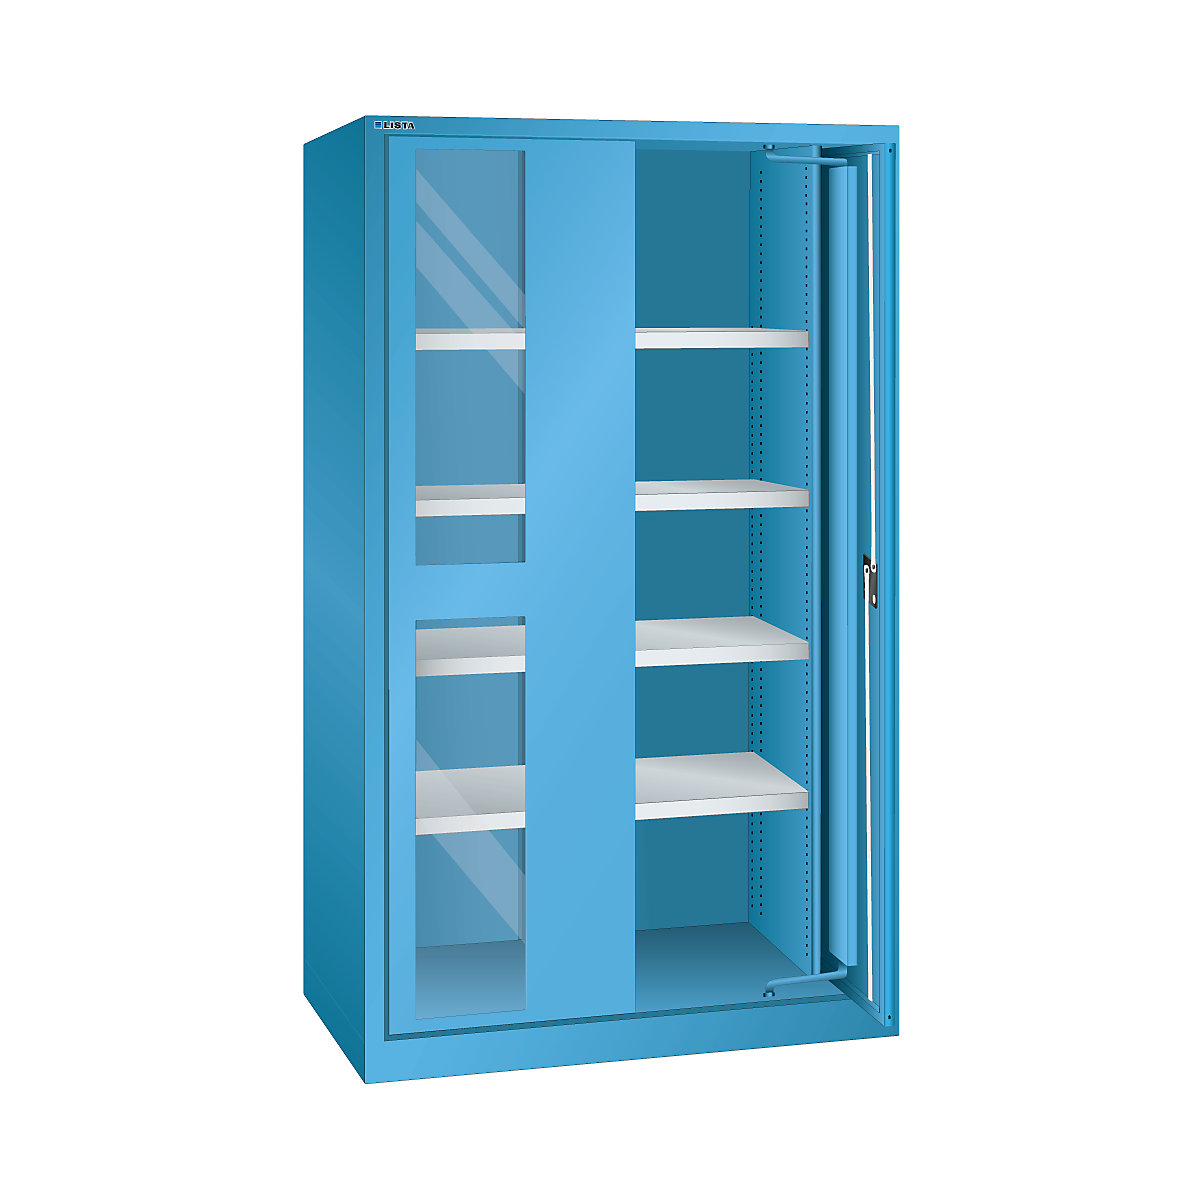 Heavy duty flush door cupboard – LISTA, 4 shelves, with vision panel doors, light blue-8